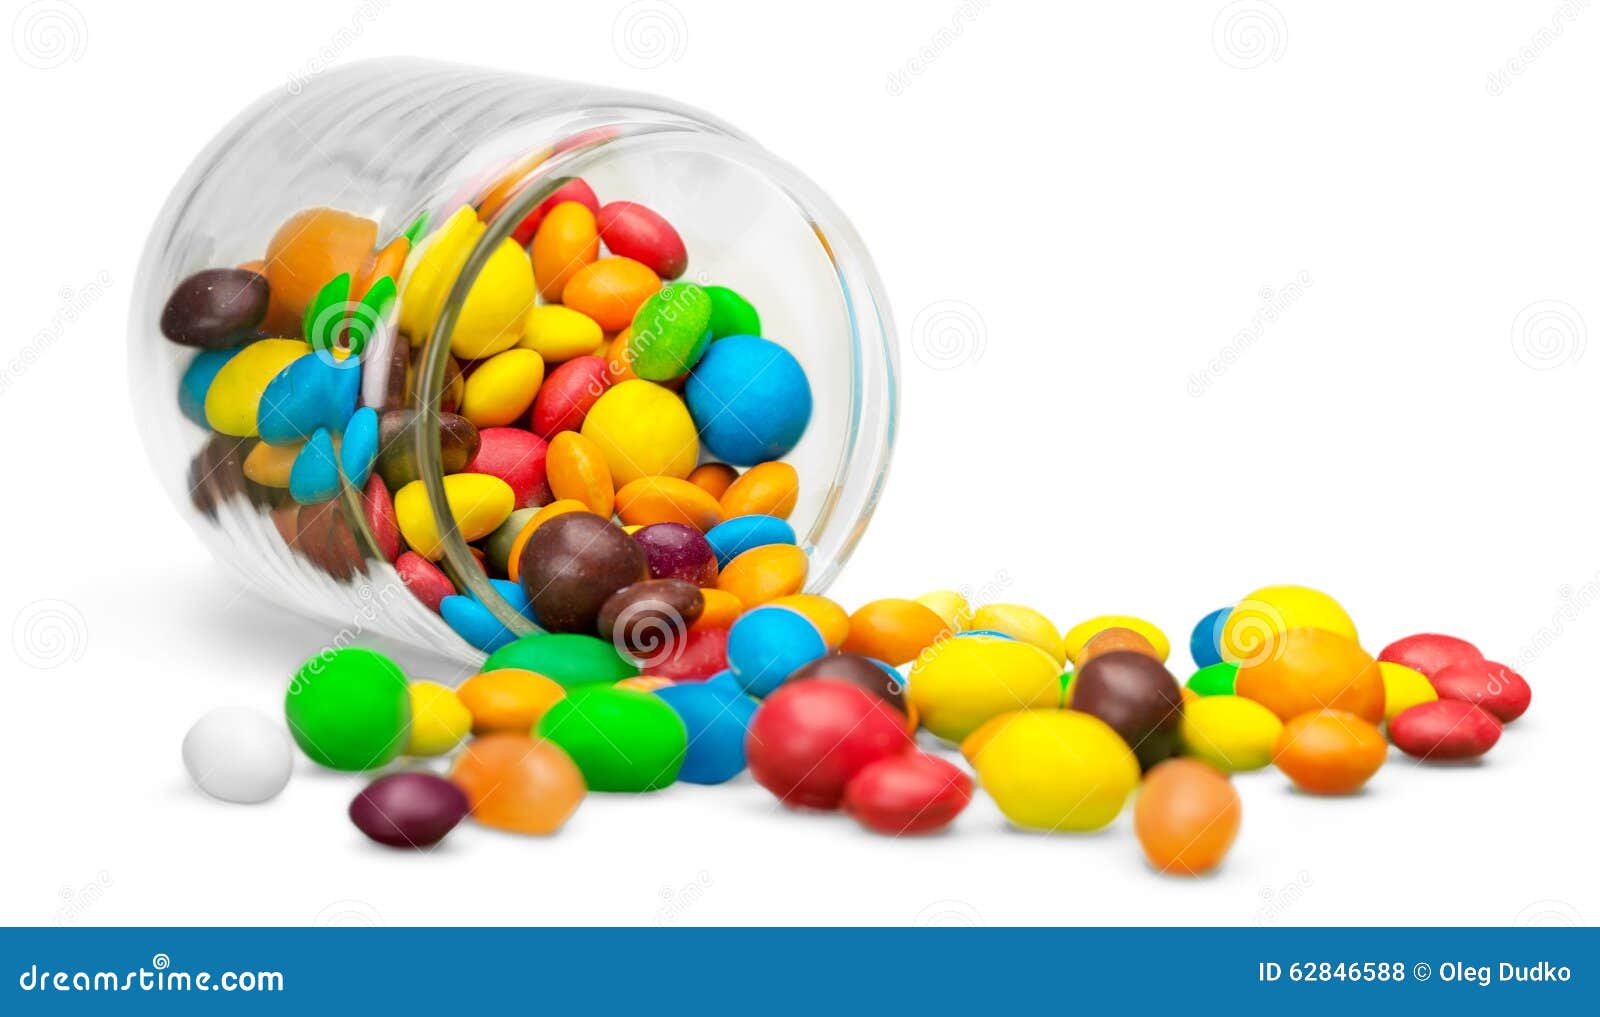 Jellybean stock photo. Image of sugar, eating, jellybean - 62846588